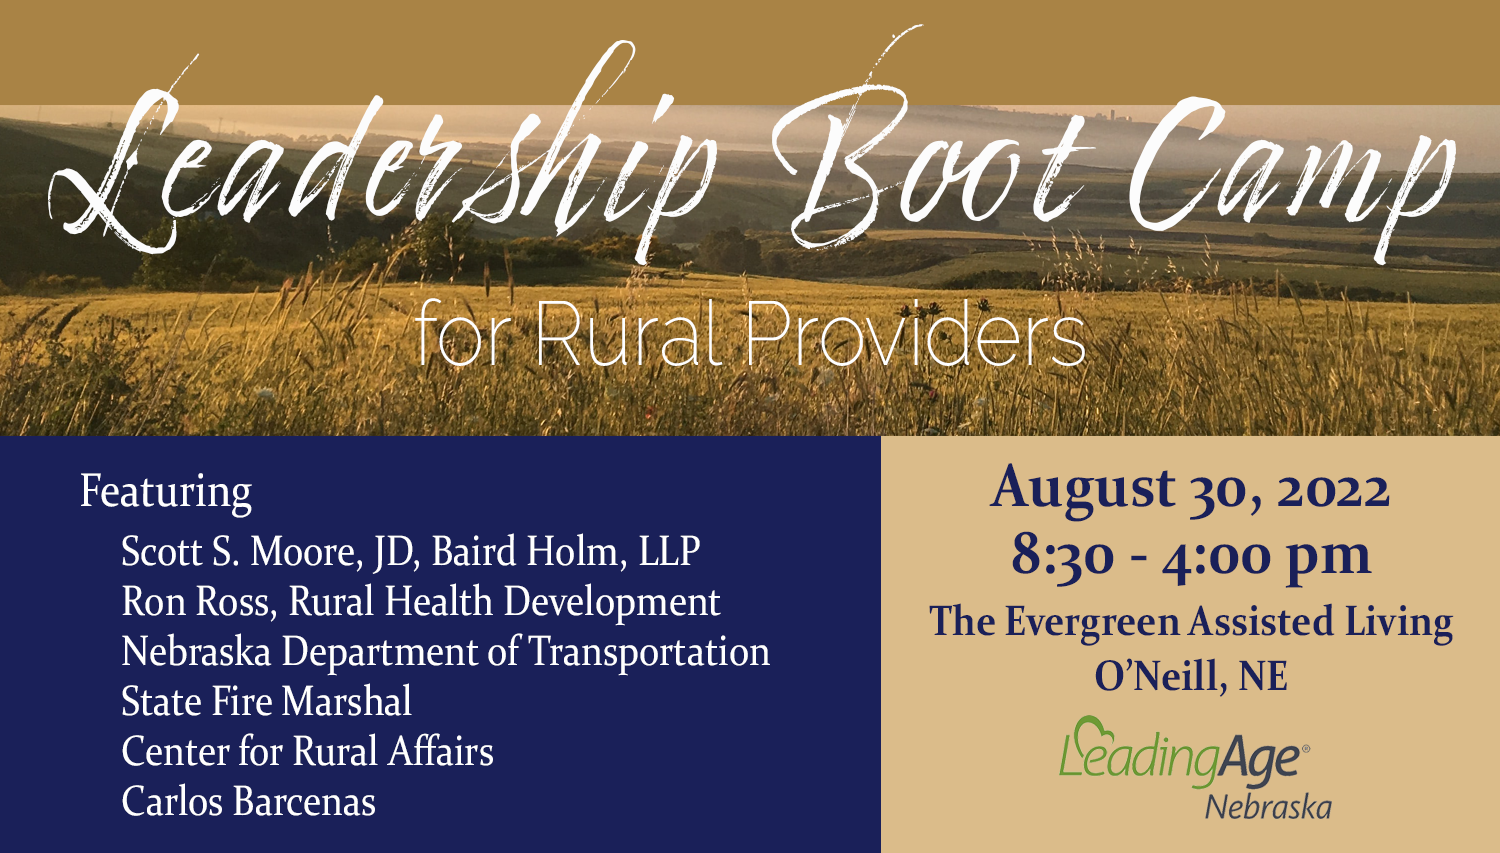 Leadership Boot Camp for Rural Providers